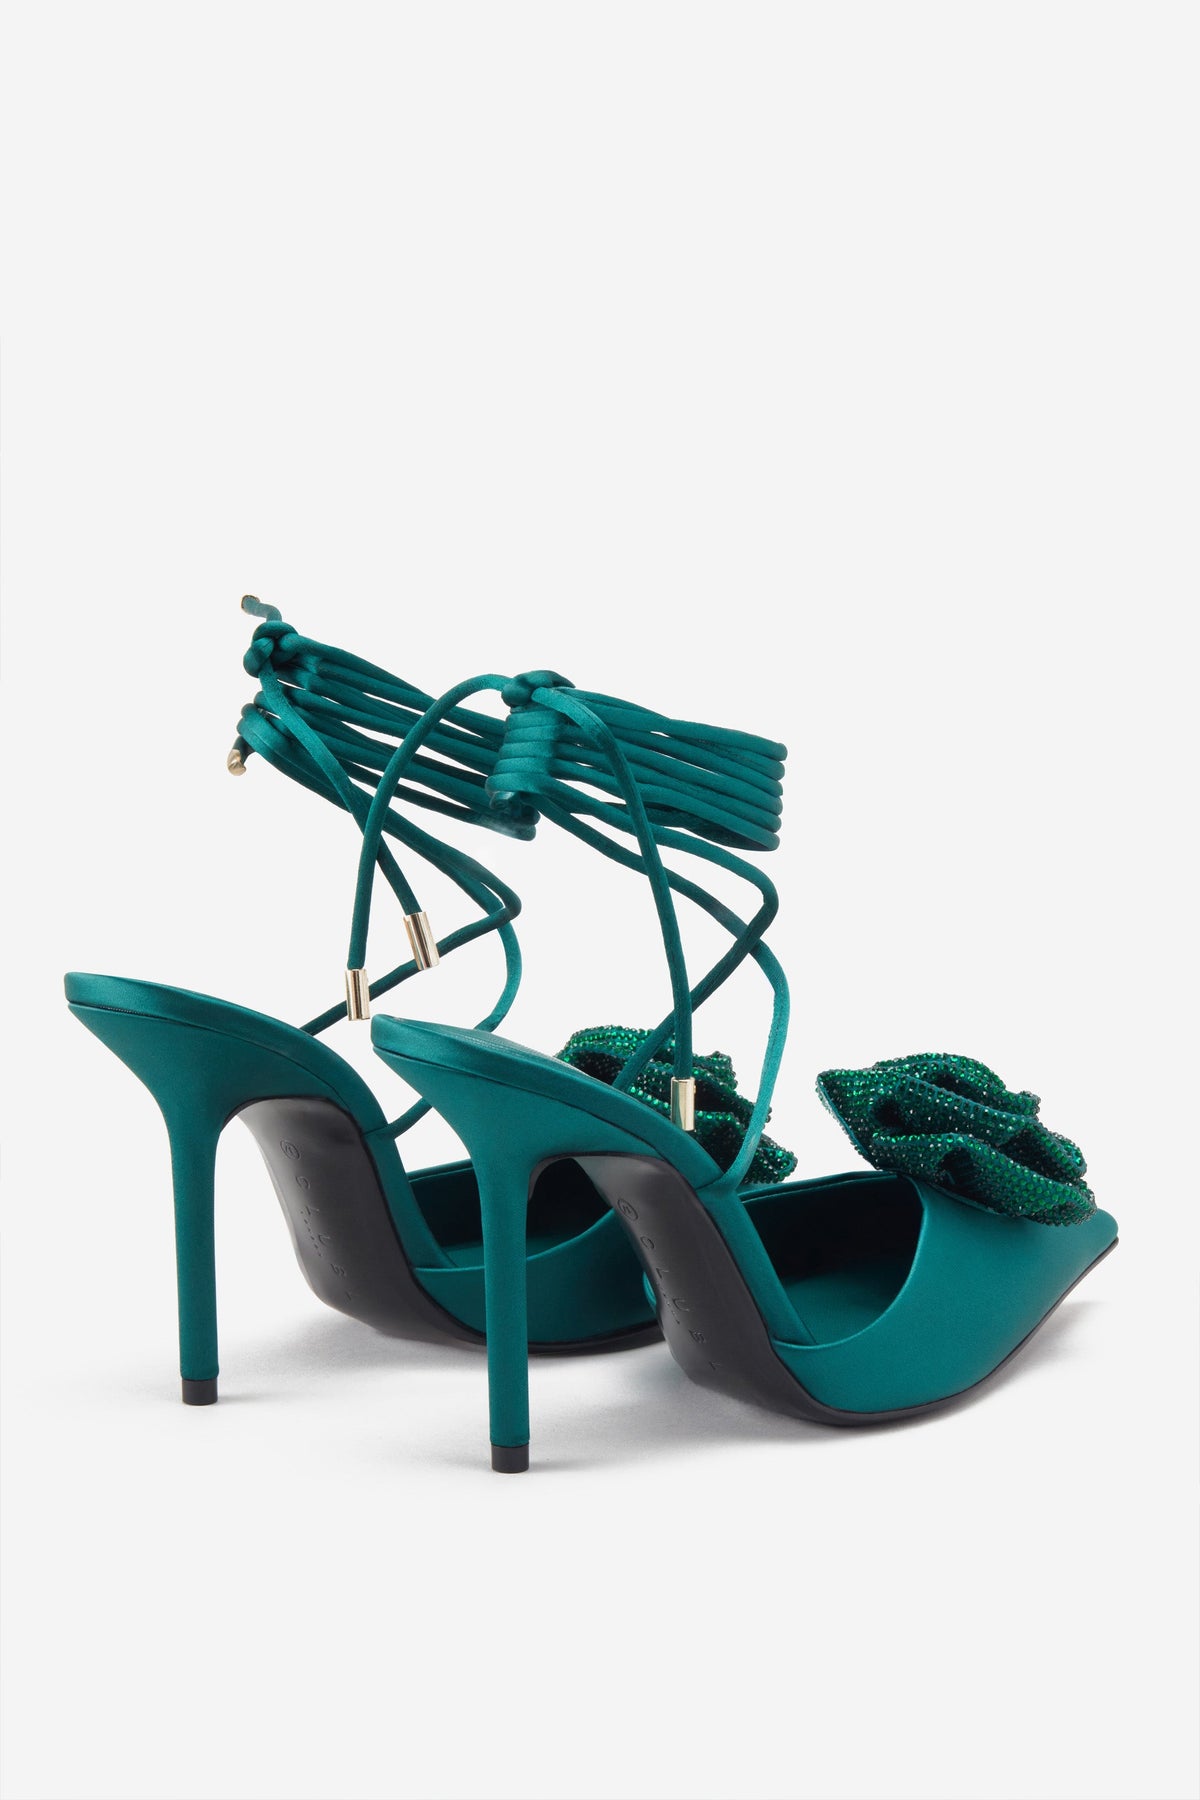 Emerald green heels | Green shoes heels, Green heels, Green shoes